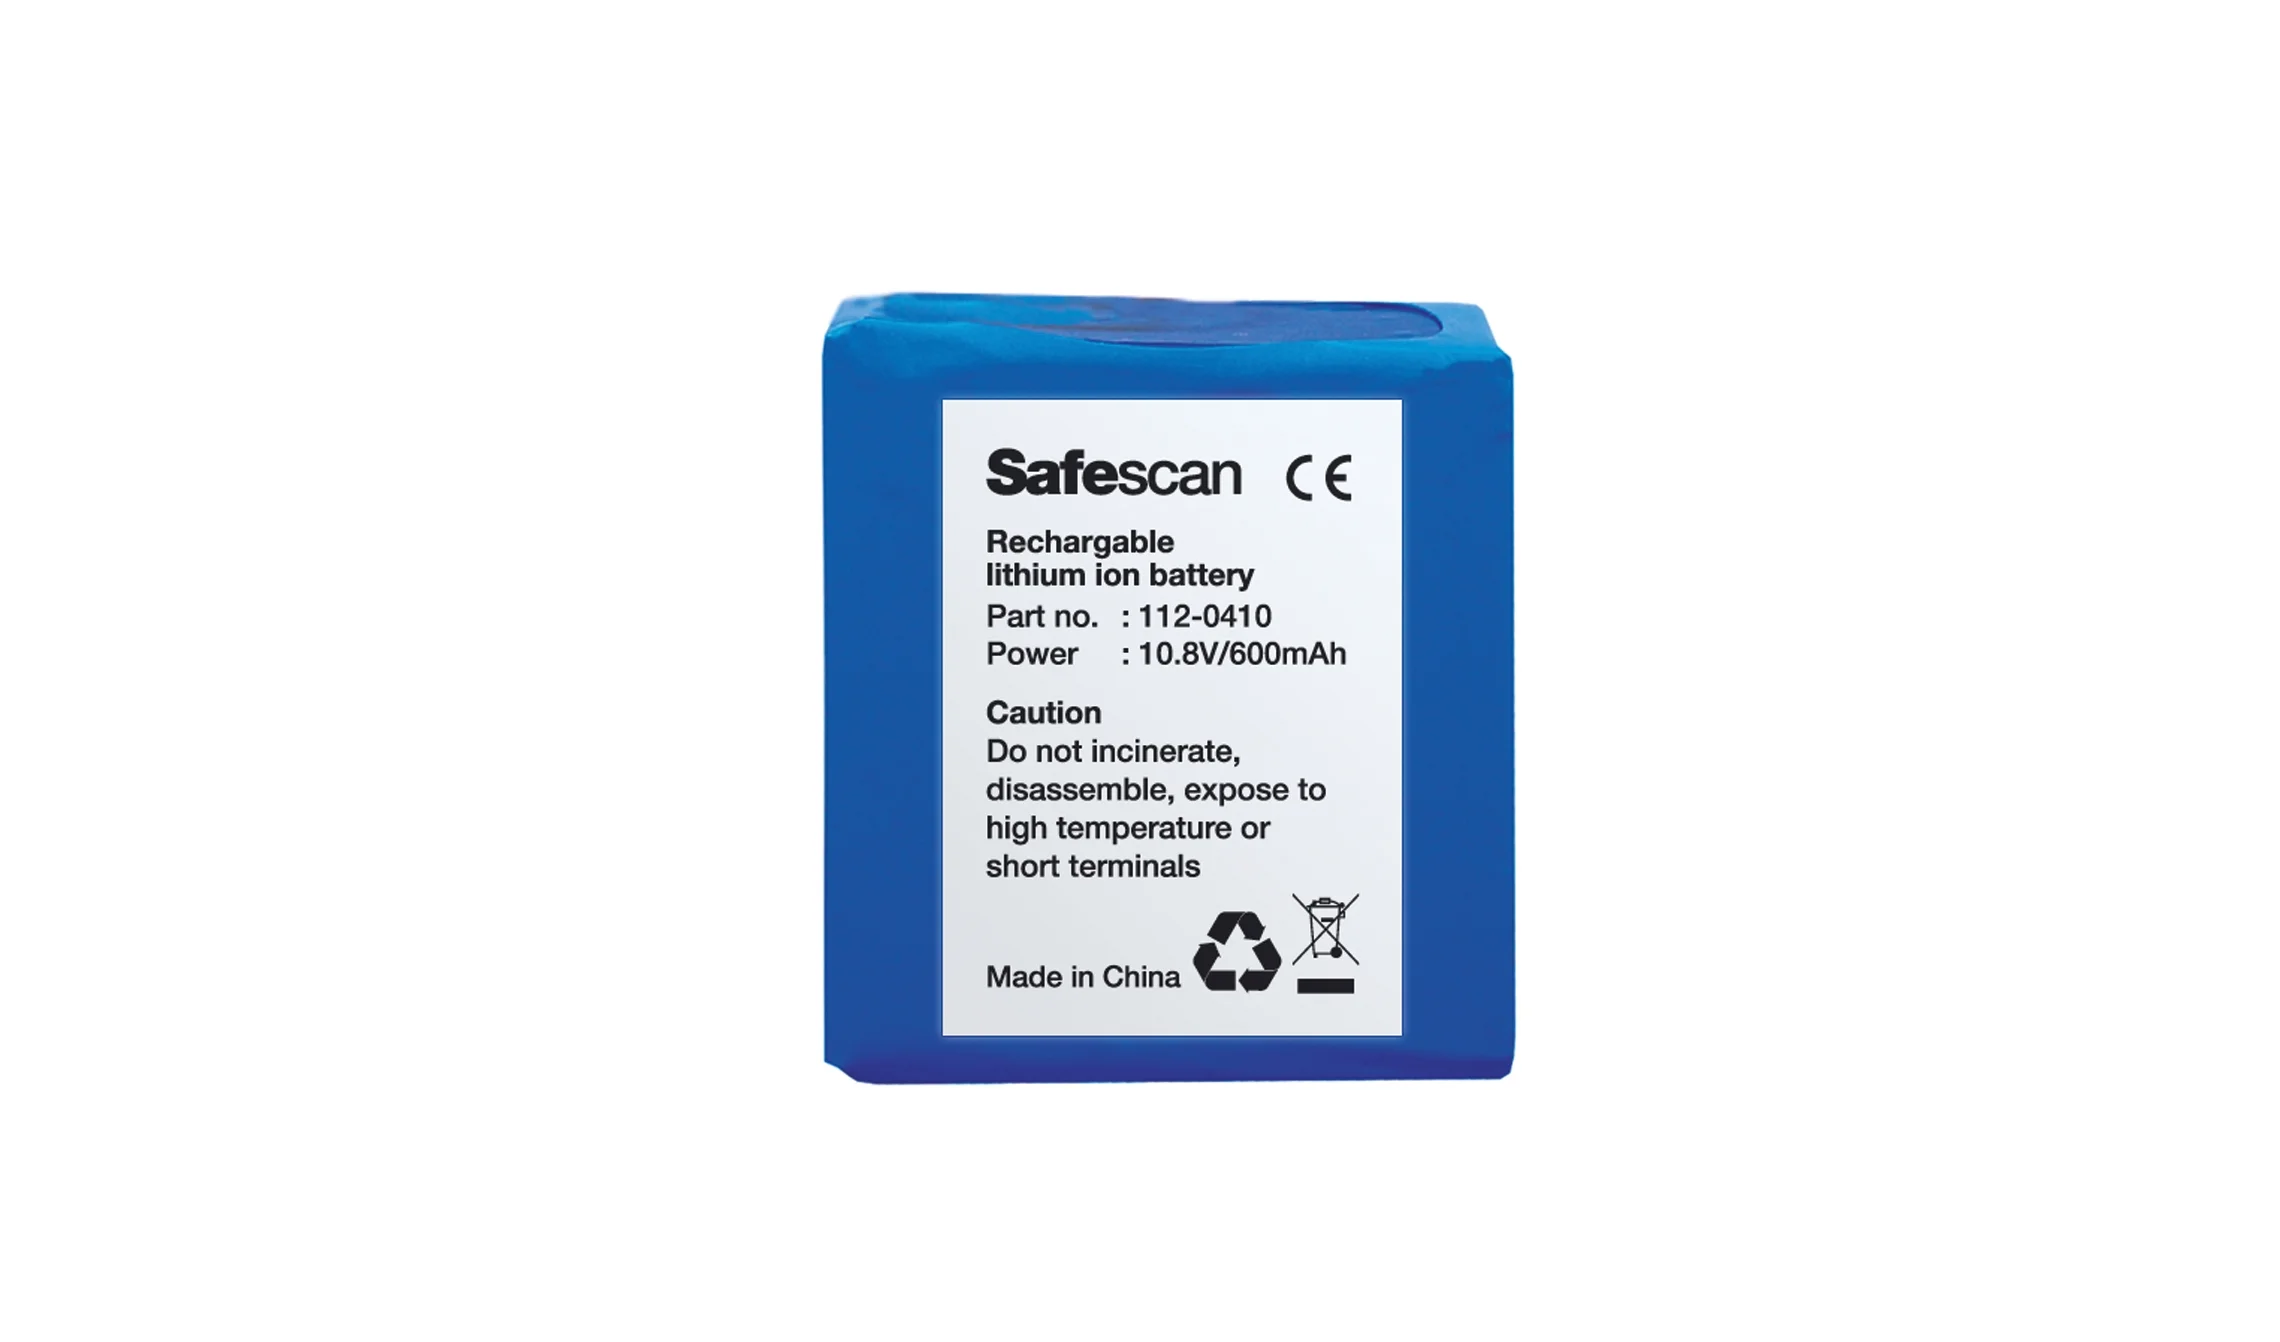 Safescan LB-105 Bateria Recargable para Detector de Billetes Falsos Safescan 155-S, 165-S y 185-S - Autonomia hasta 30h